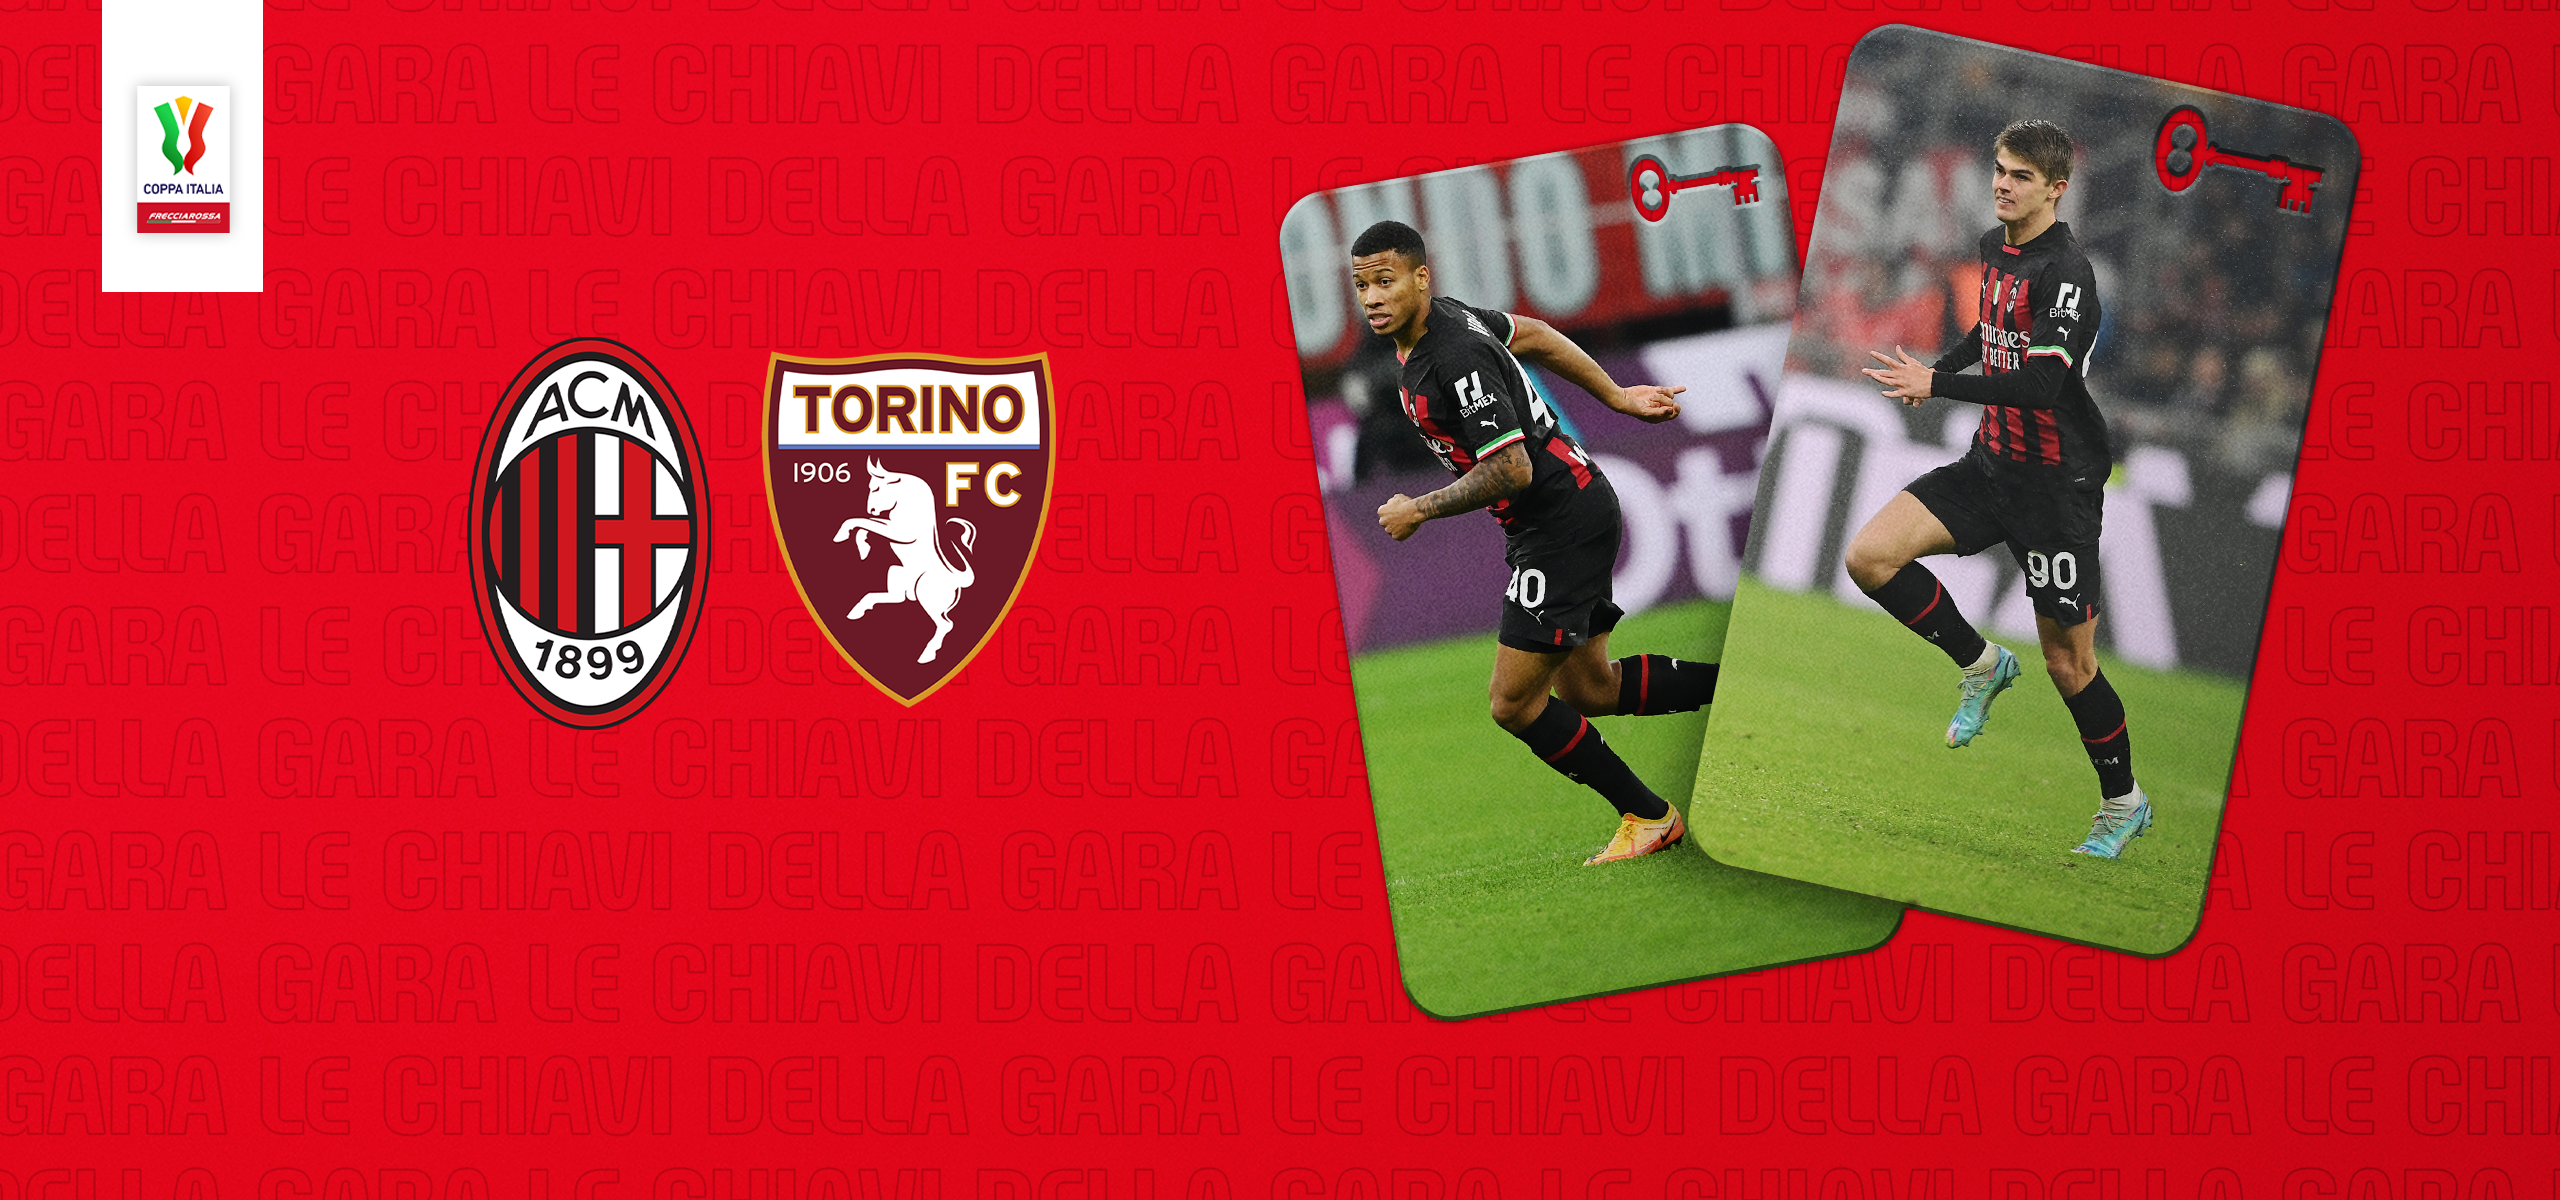 TORINO FC Squad Season 2023/24, Torino FC